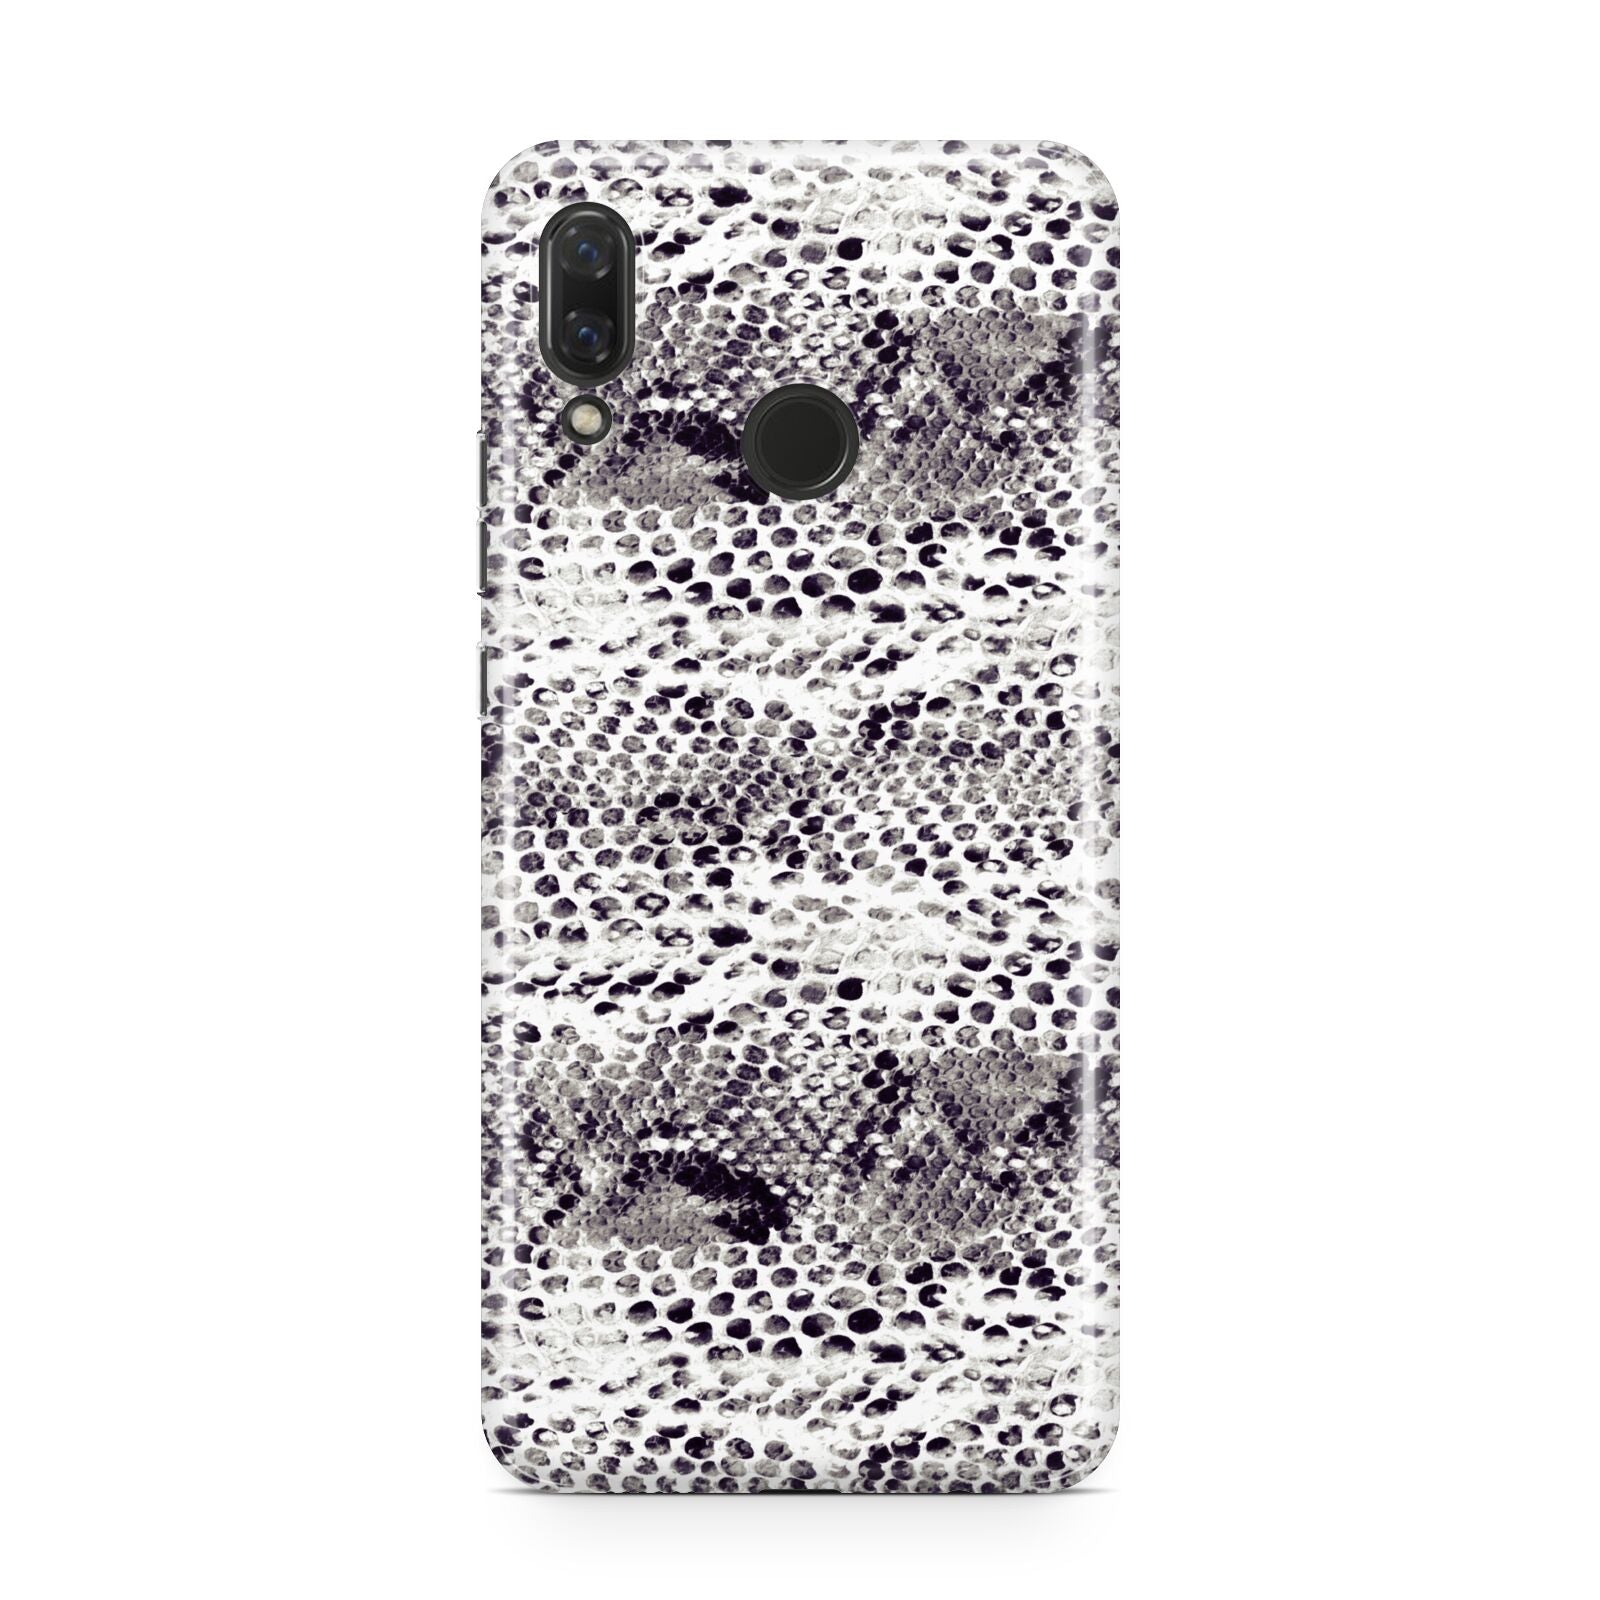 Textured Snakeskin Huawei Nova 3 Phone Case